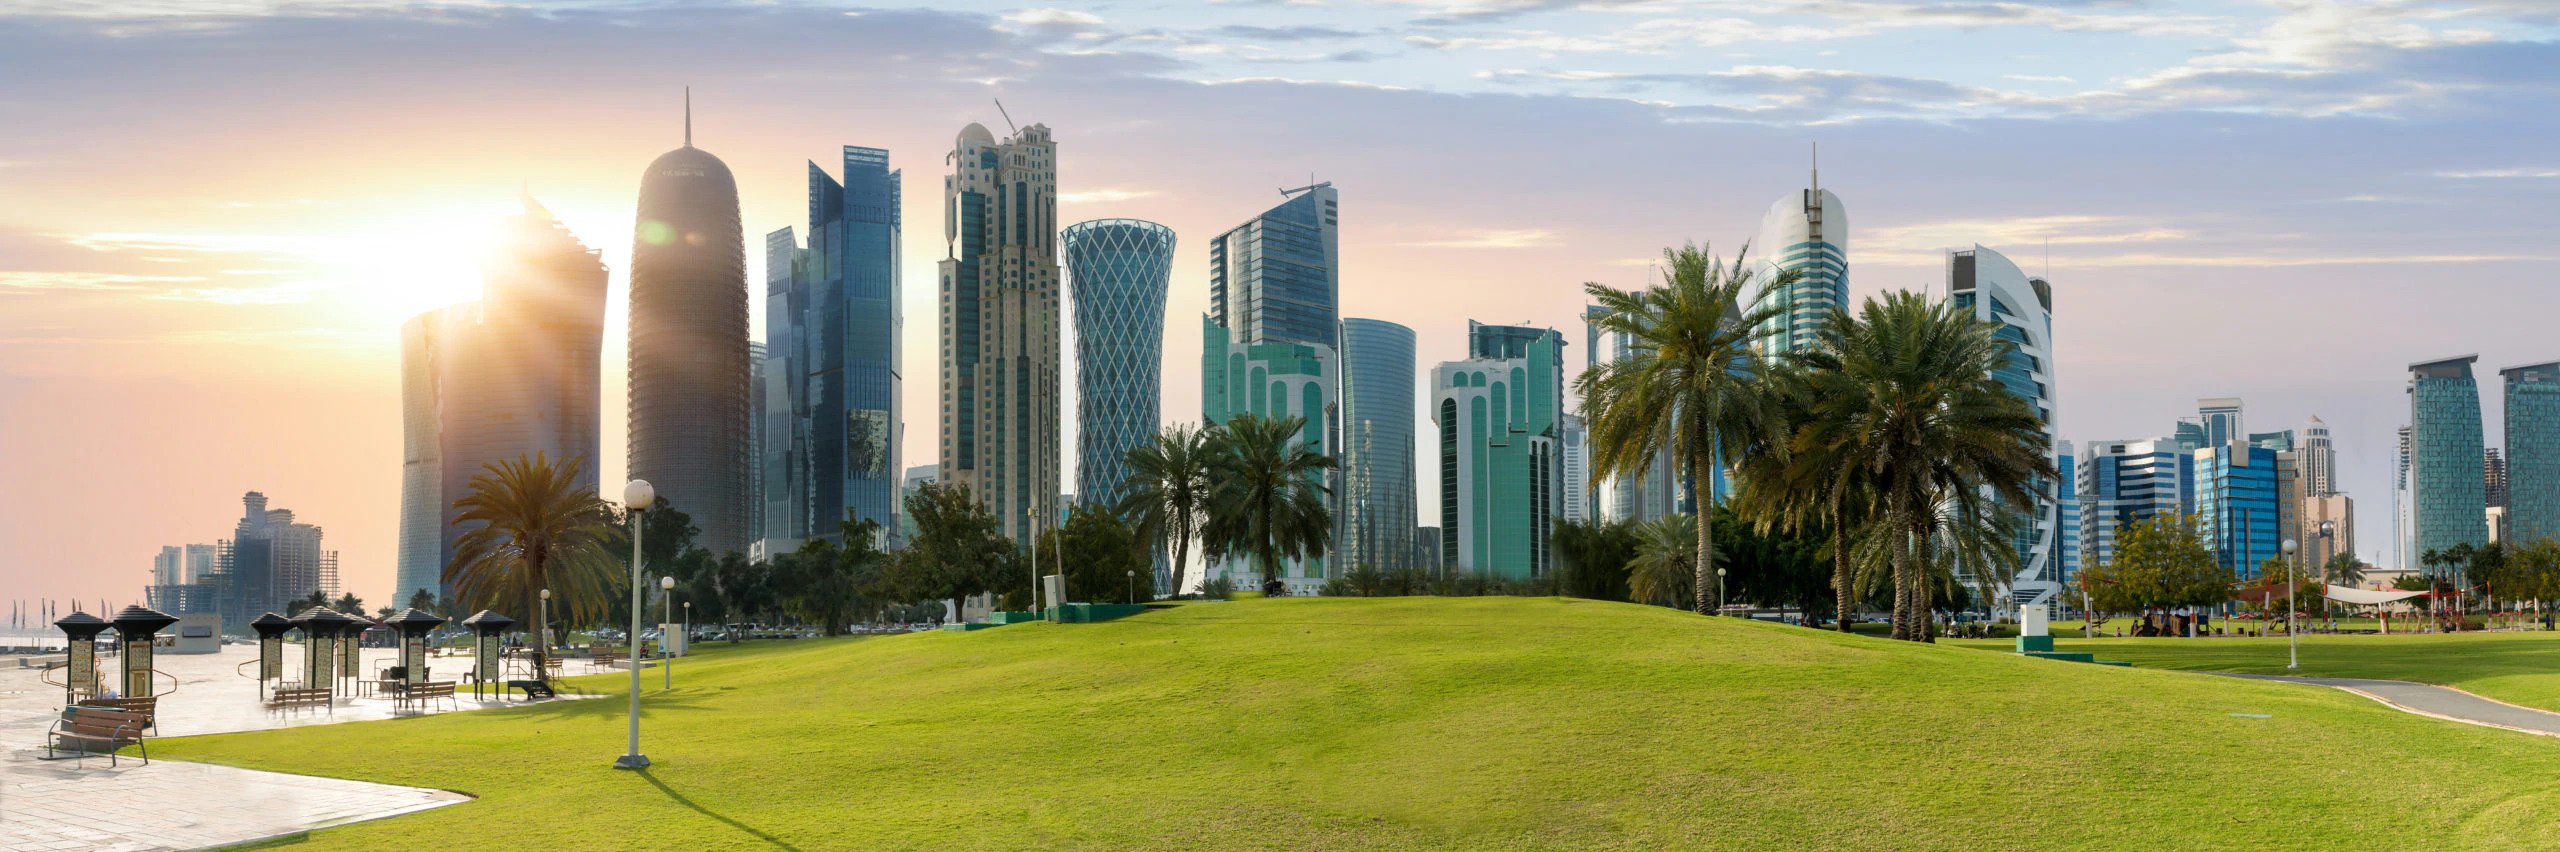 Qatar Hotel - Reco Surfaces Trade